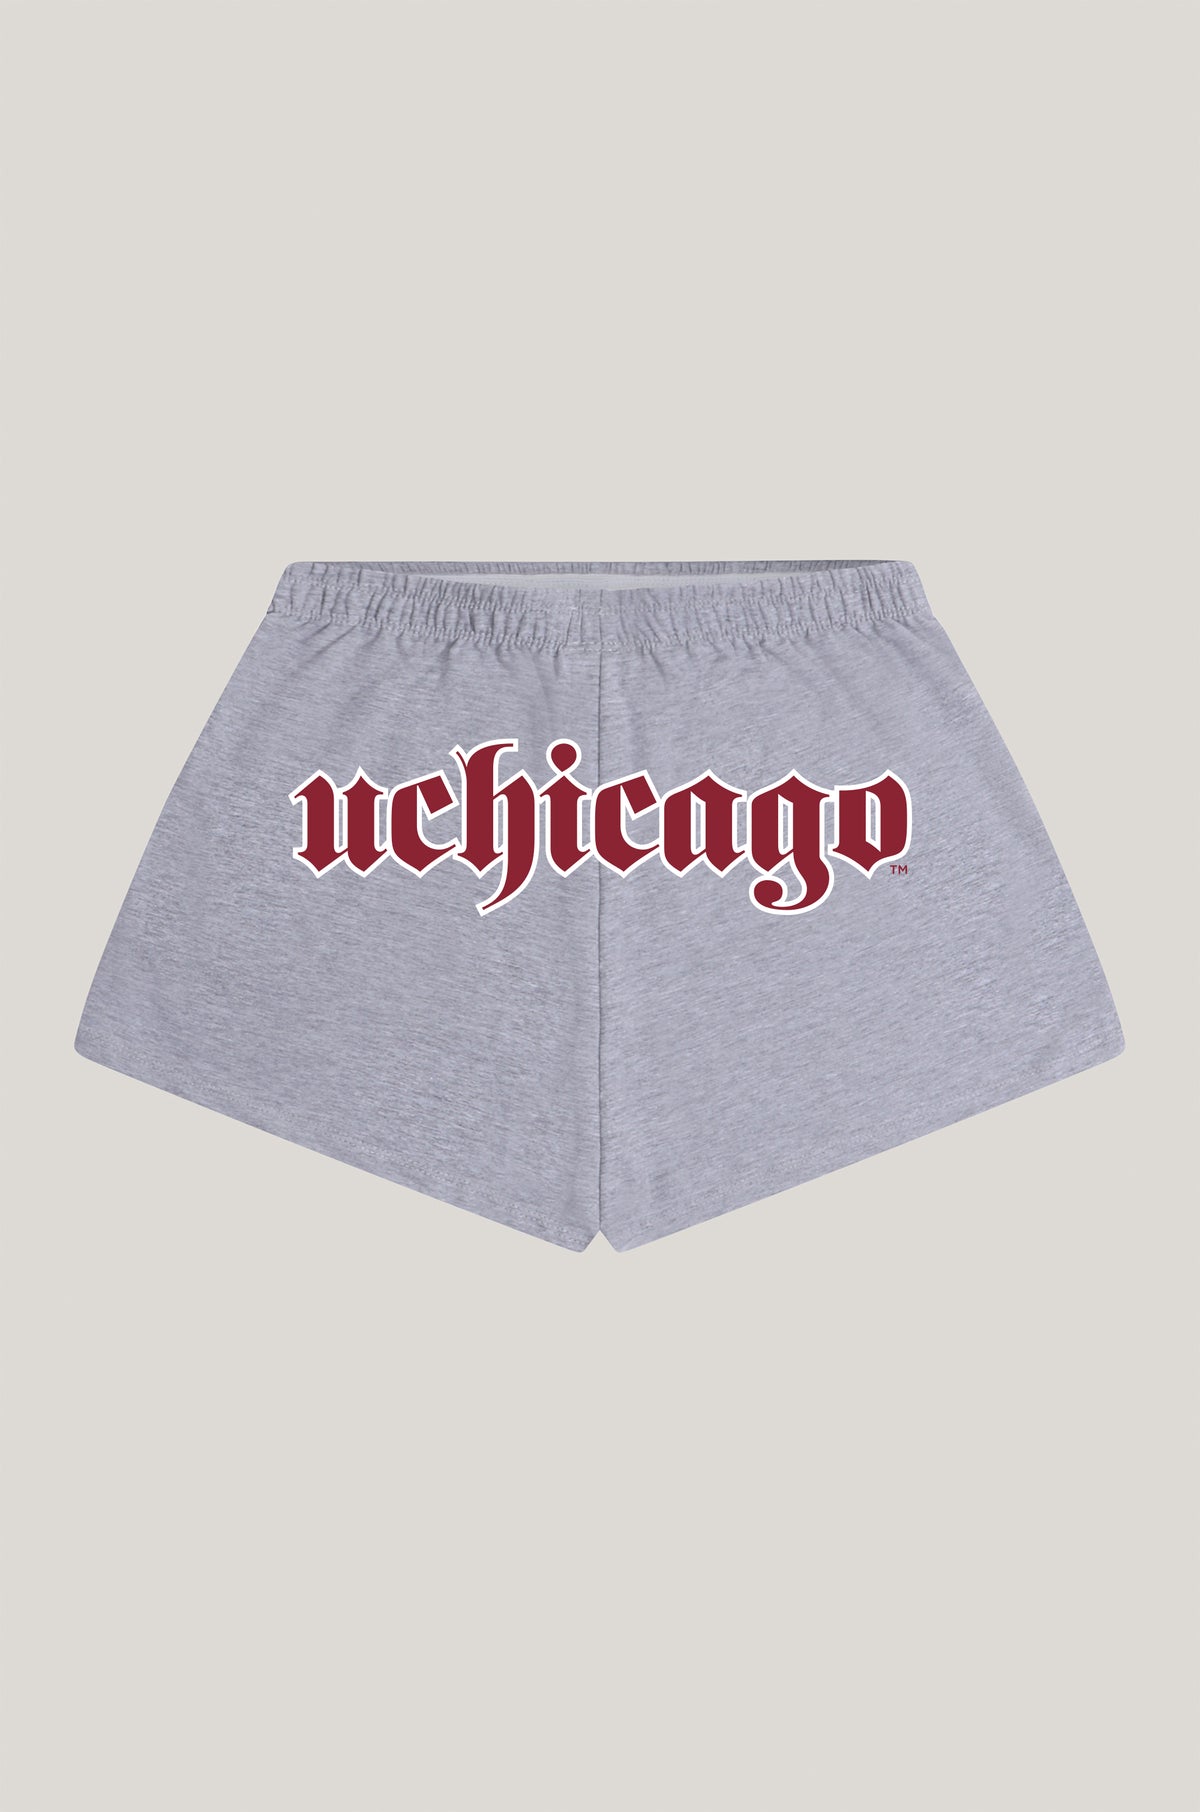 Chicago P.E. Shorts